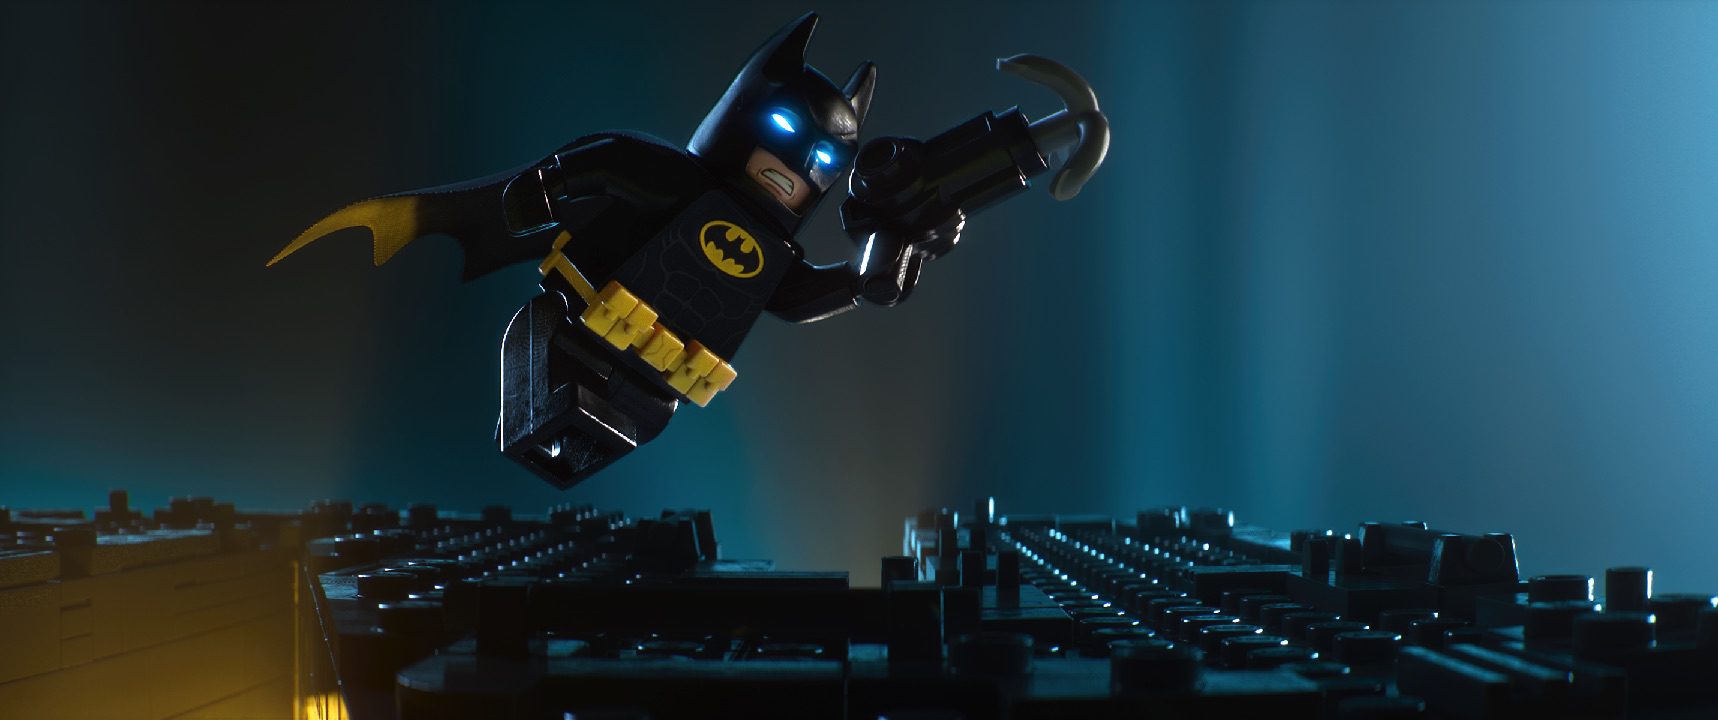 Batman (Will Arnett) zips through the air in The Lego Batman Movie. (Warner Bros Pictures)